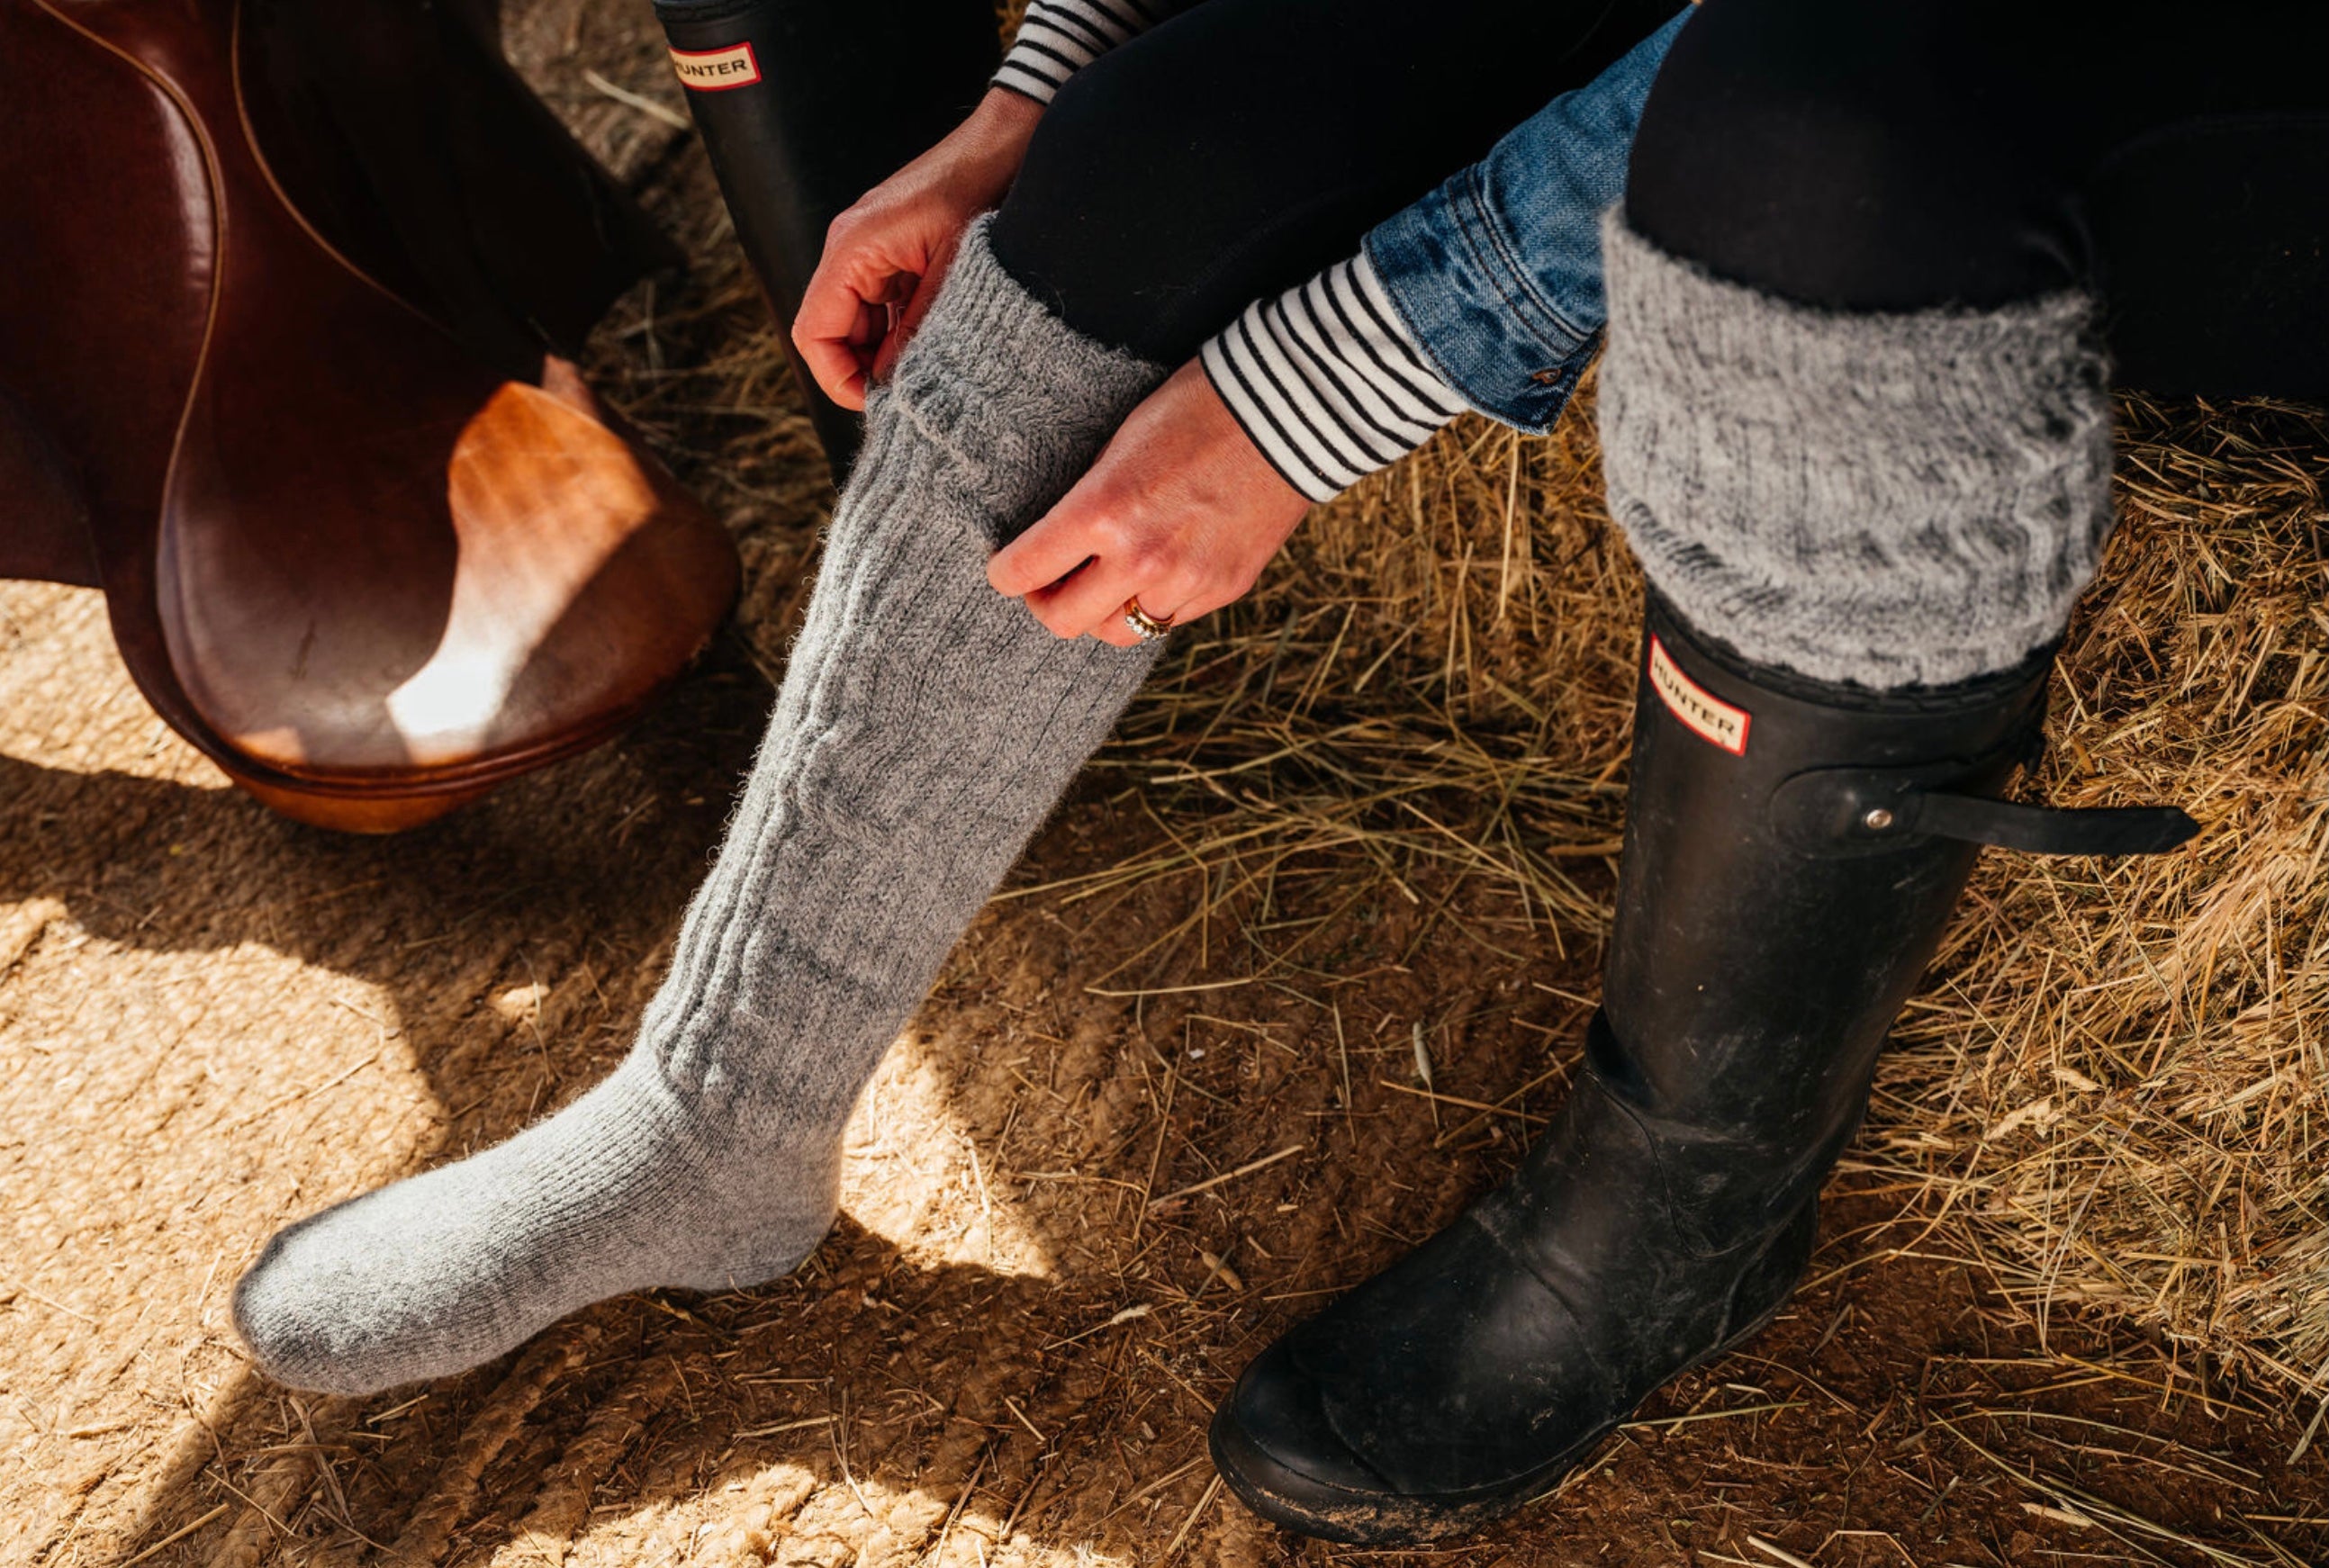 Alpaca Socks- The “Wellington Wellie” Knee or boot Sock